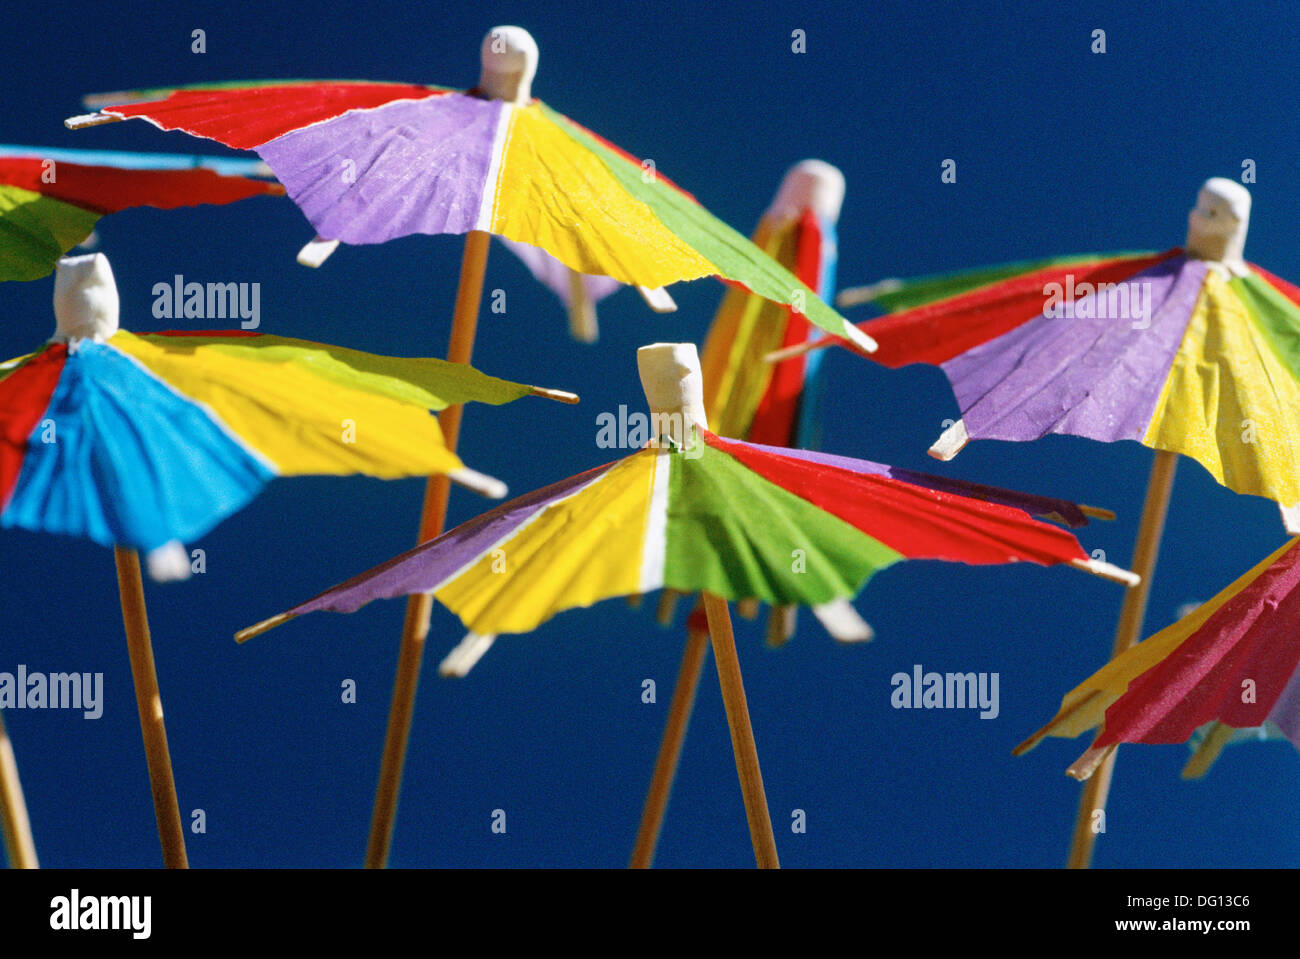 Little umbrellas Stock Photo